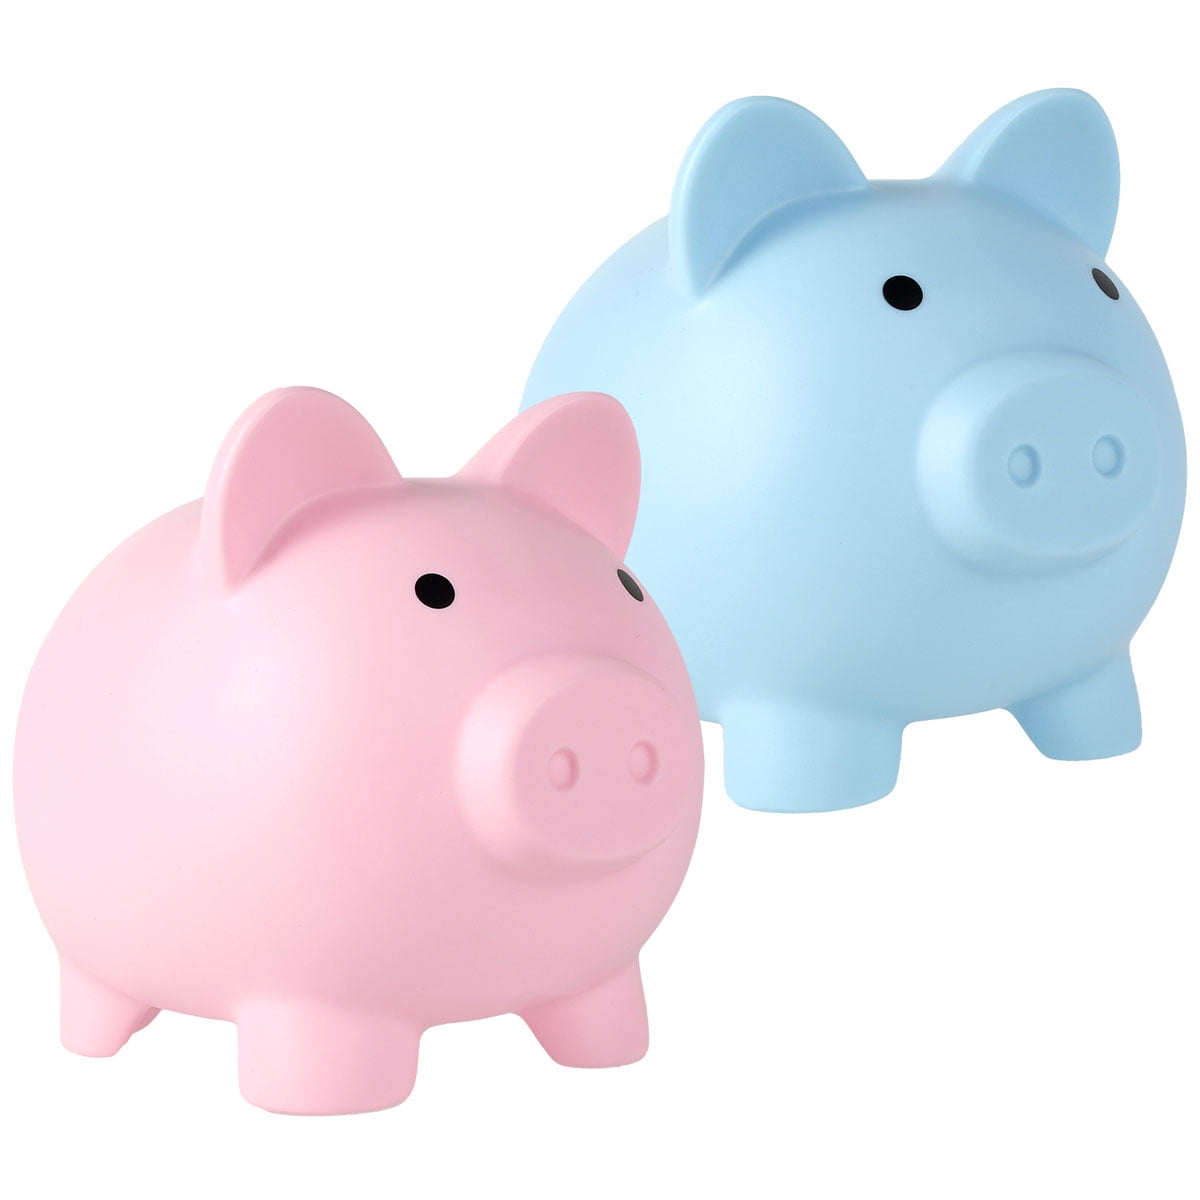 Metal Hollow Piggy Bank can Only Enter Adult Banknote Coin Drop-Proof Piggy Bank Decoration Gift Piggy Banks Piggy Banks for Kids Money Safe 